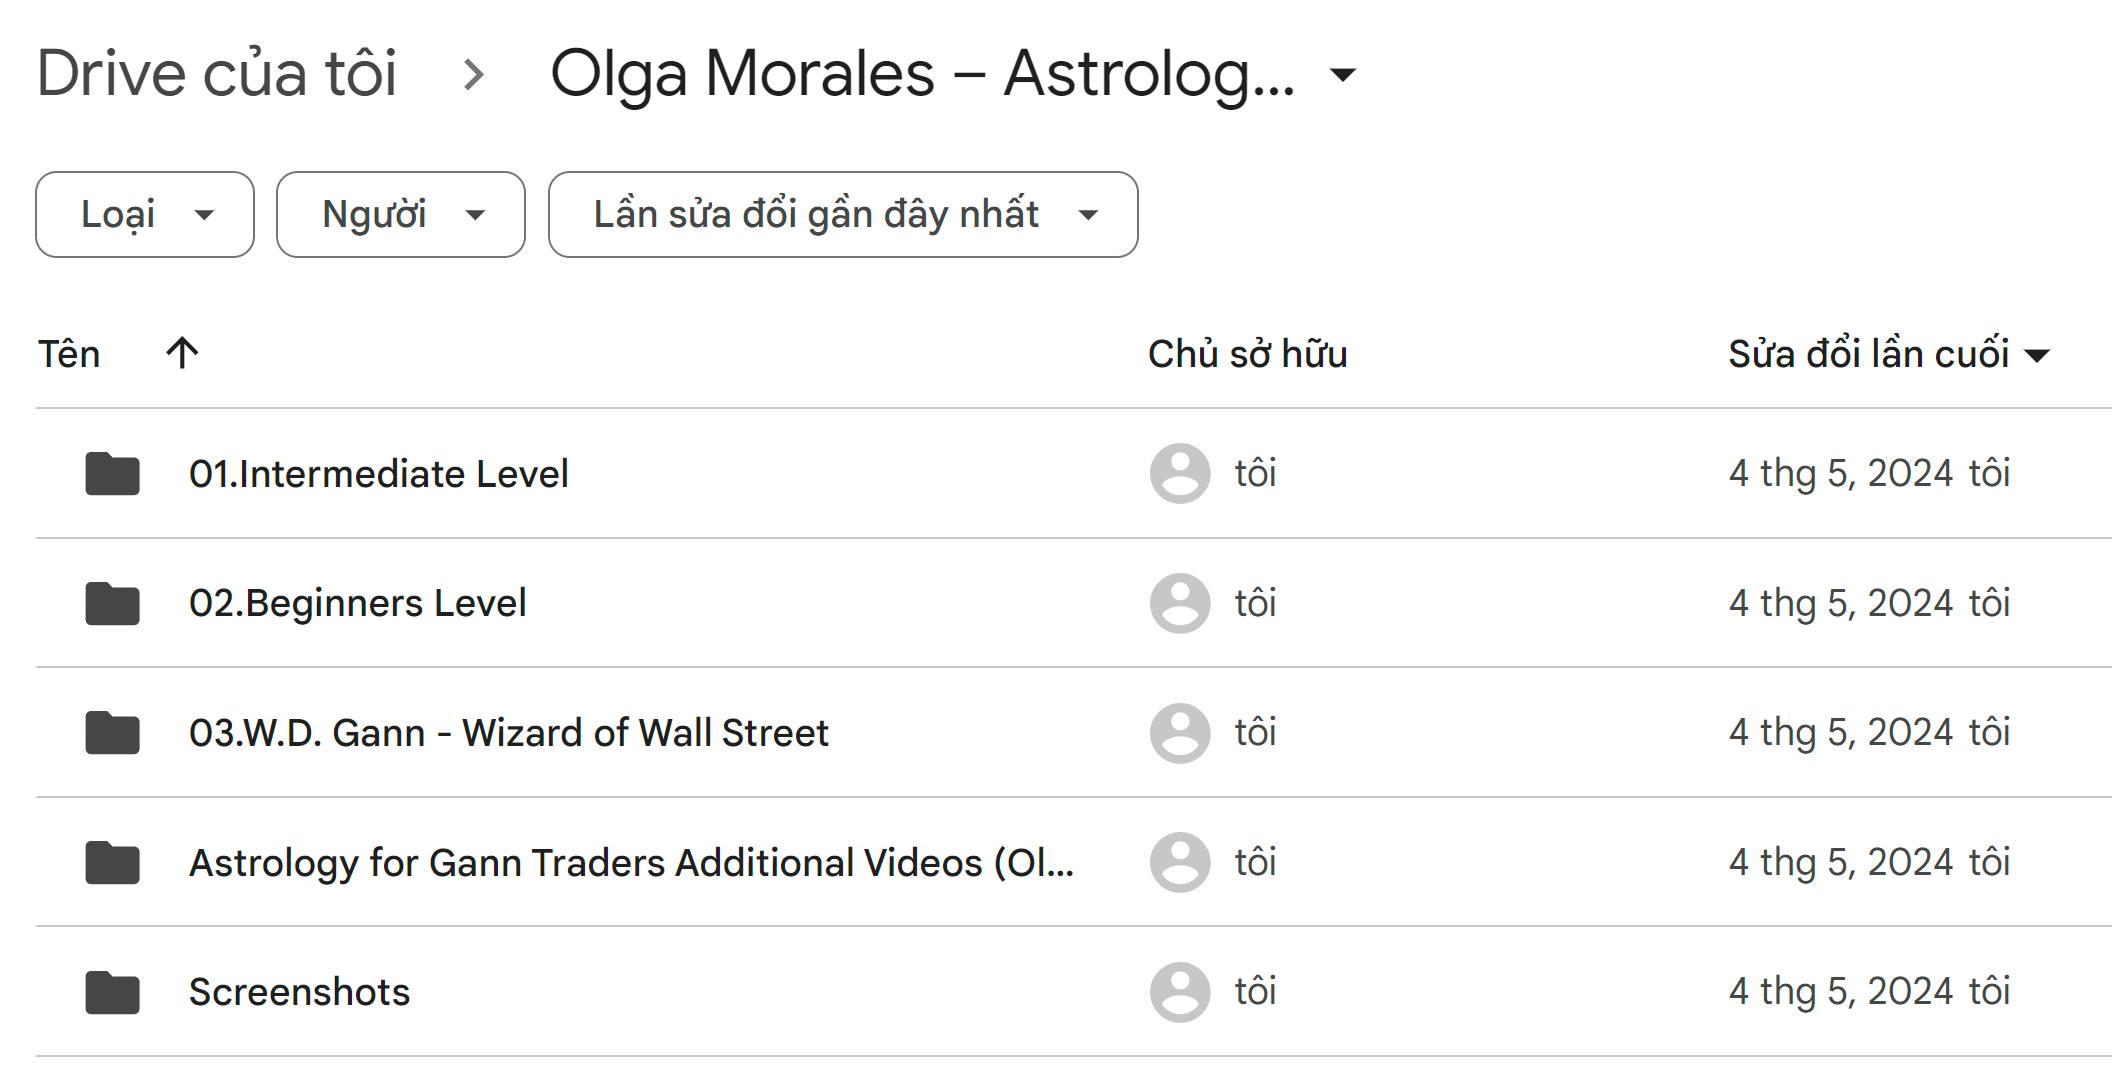 What Is Olga Morales Astrology For Gann Traders